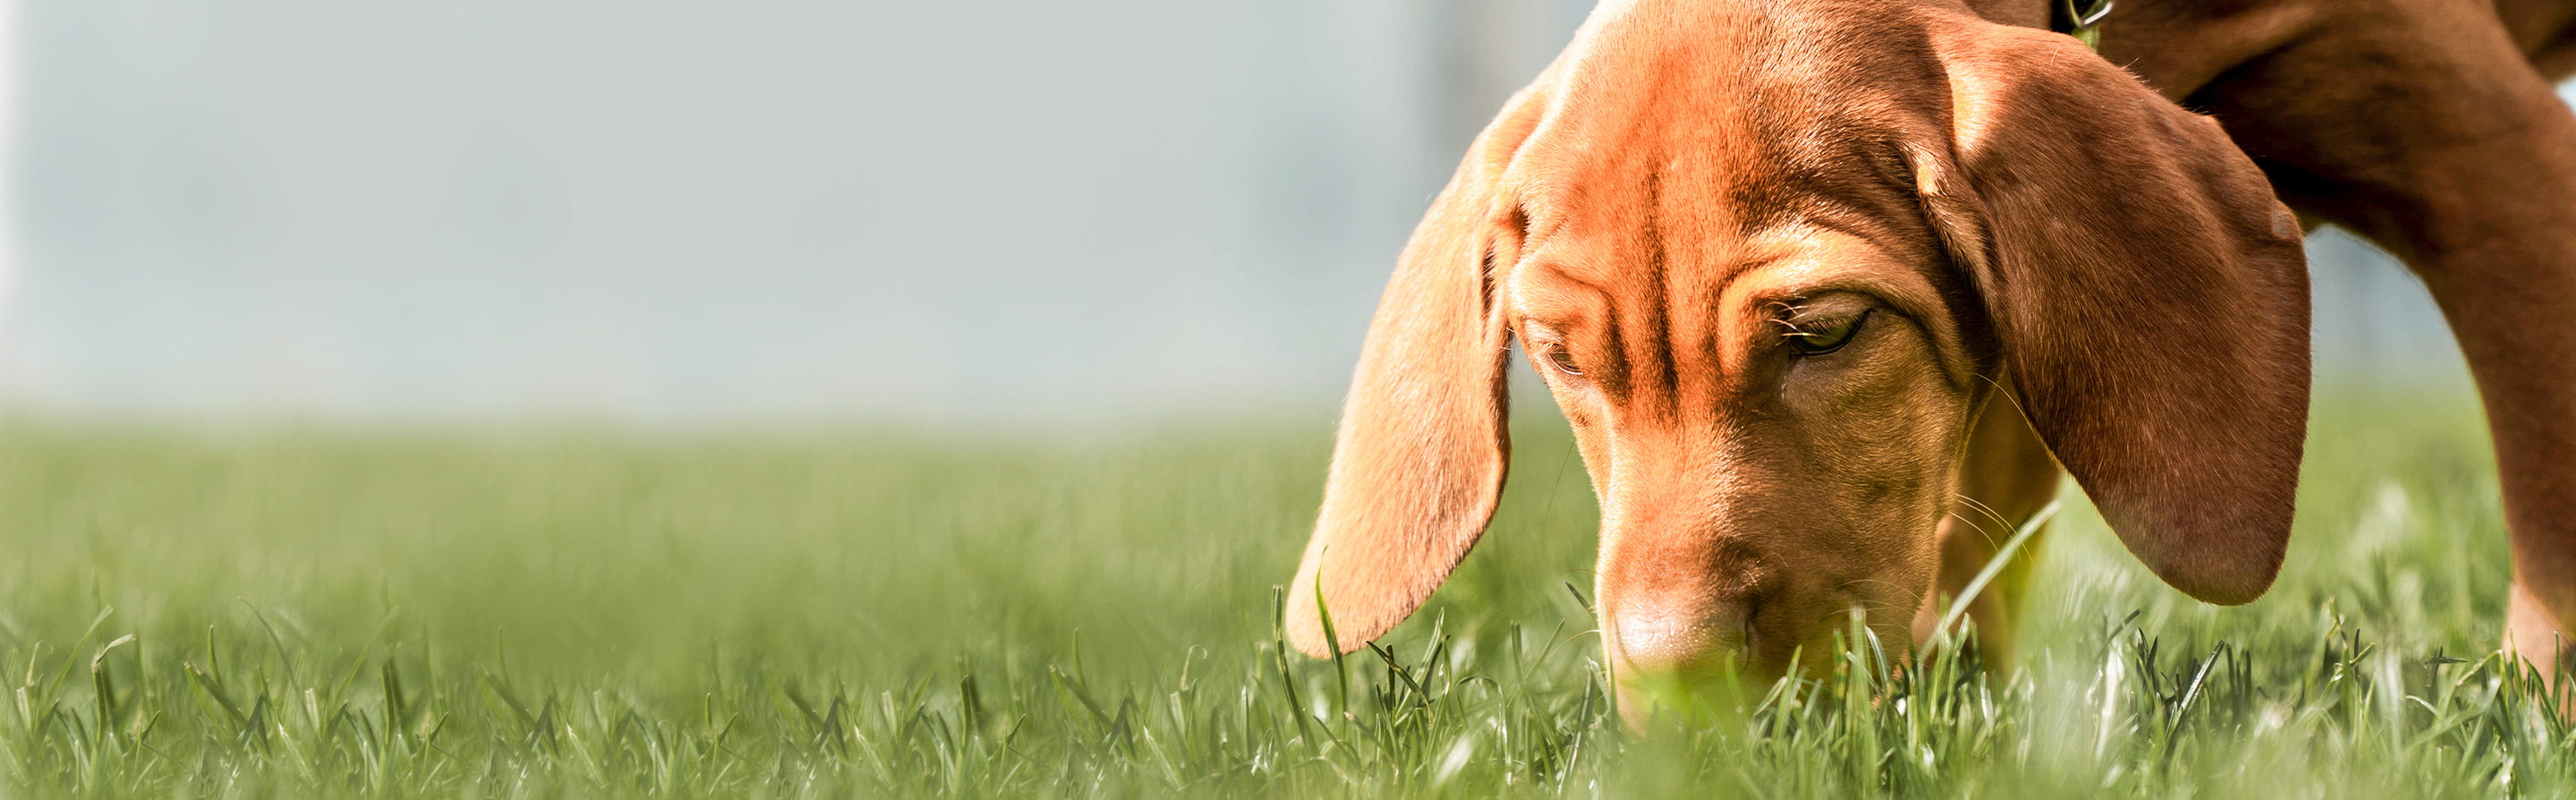 Hungarian Vizsla puppy outdoors sniffing grass